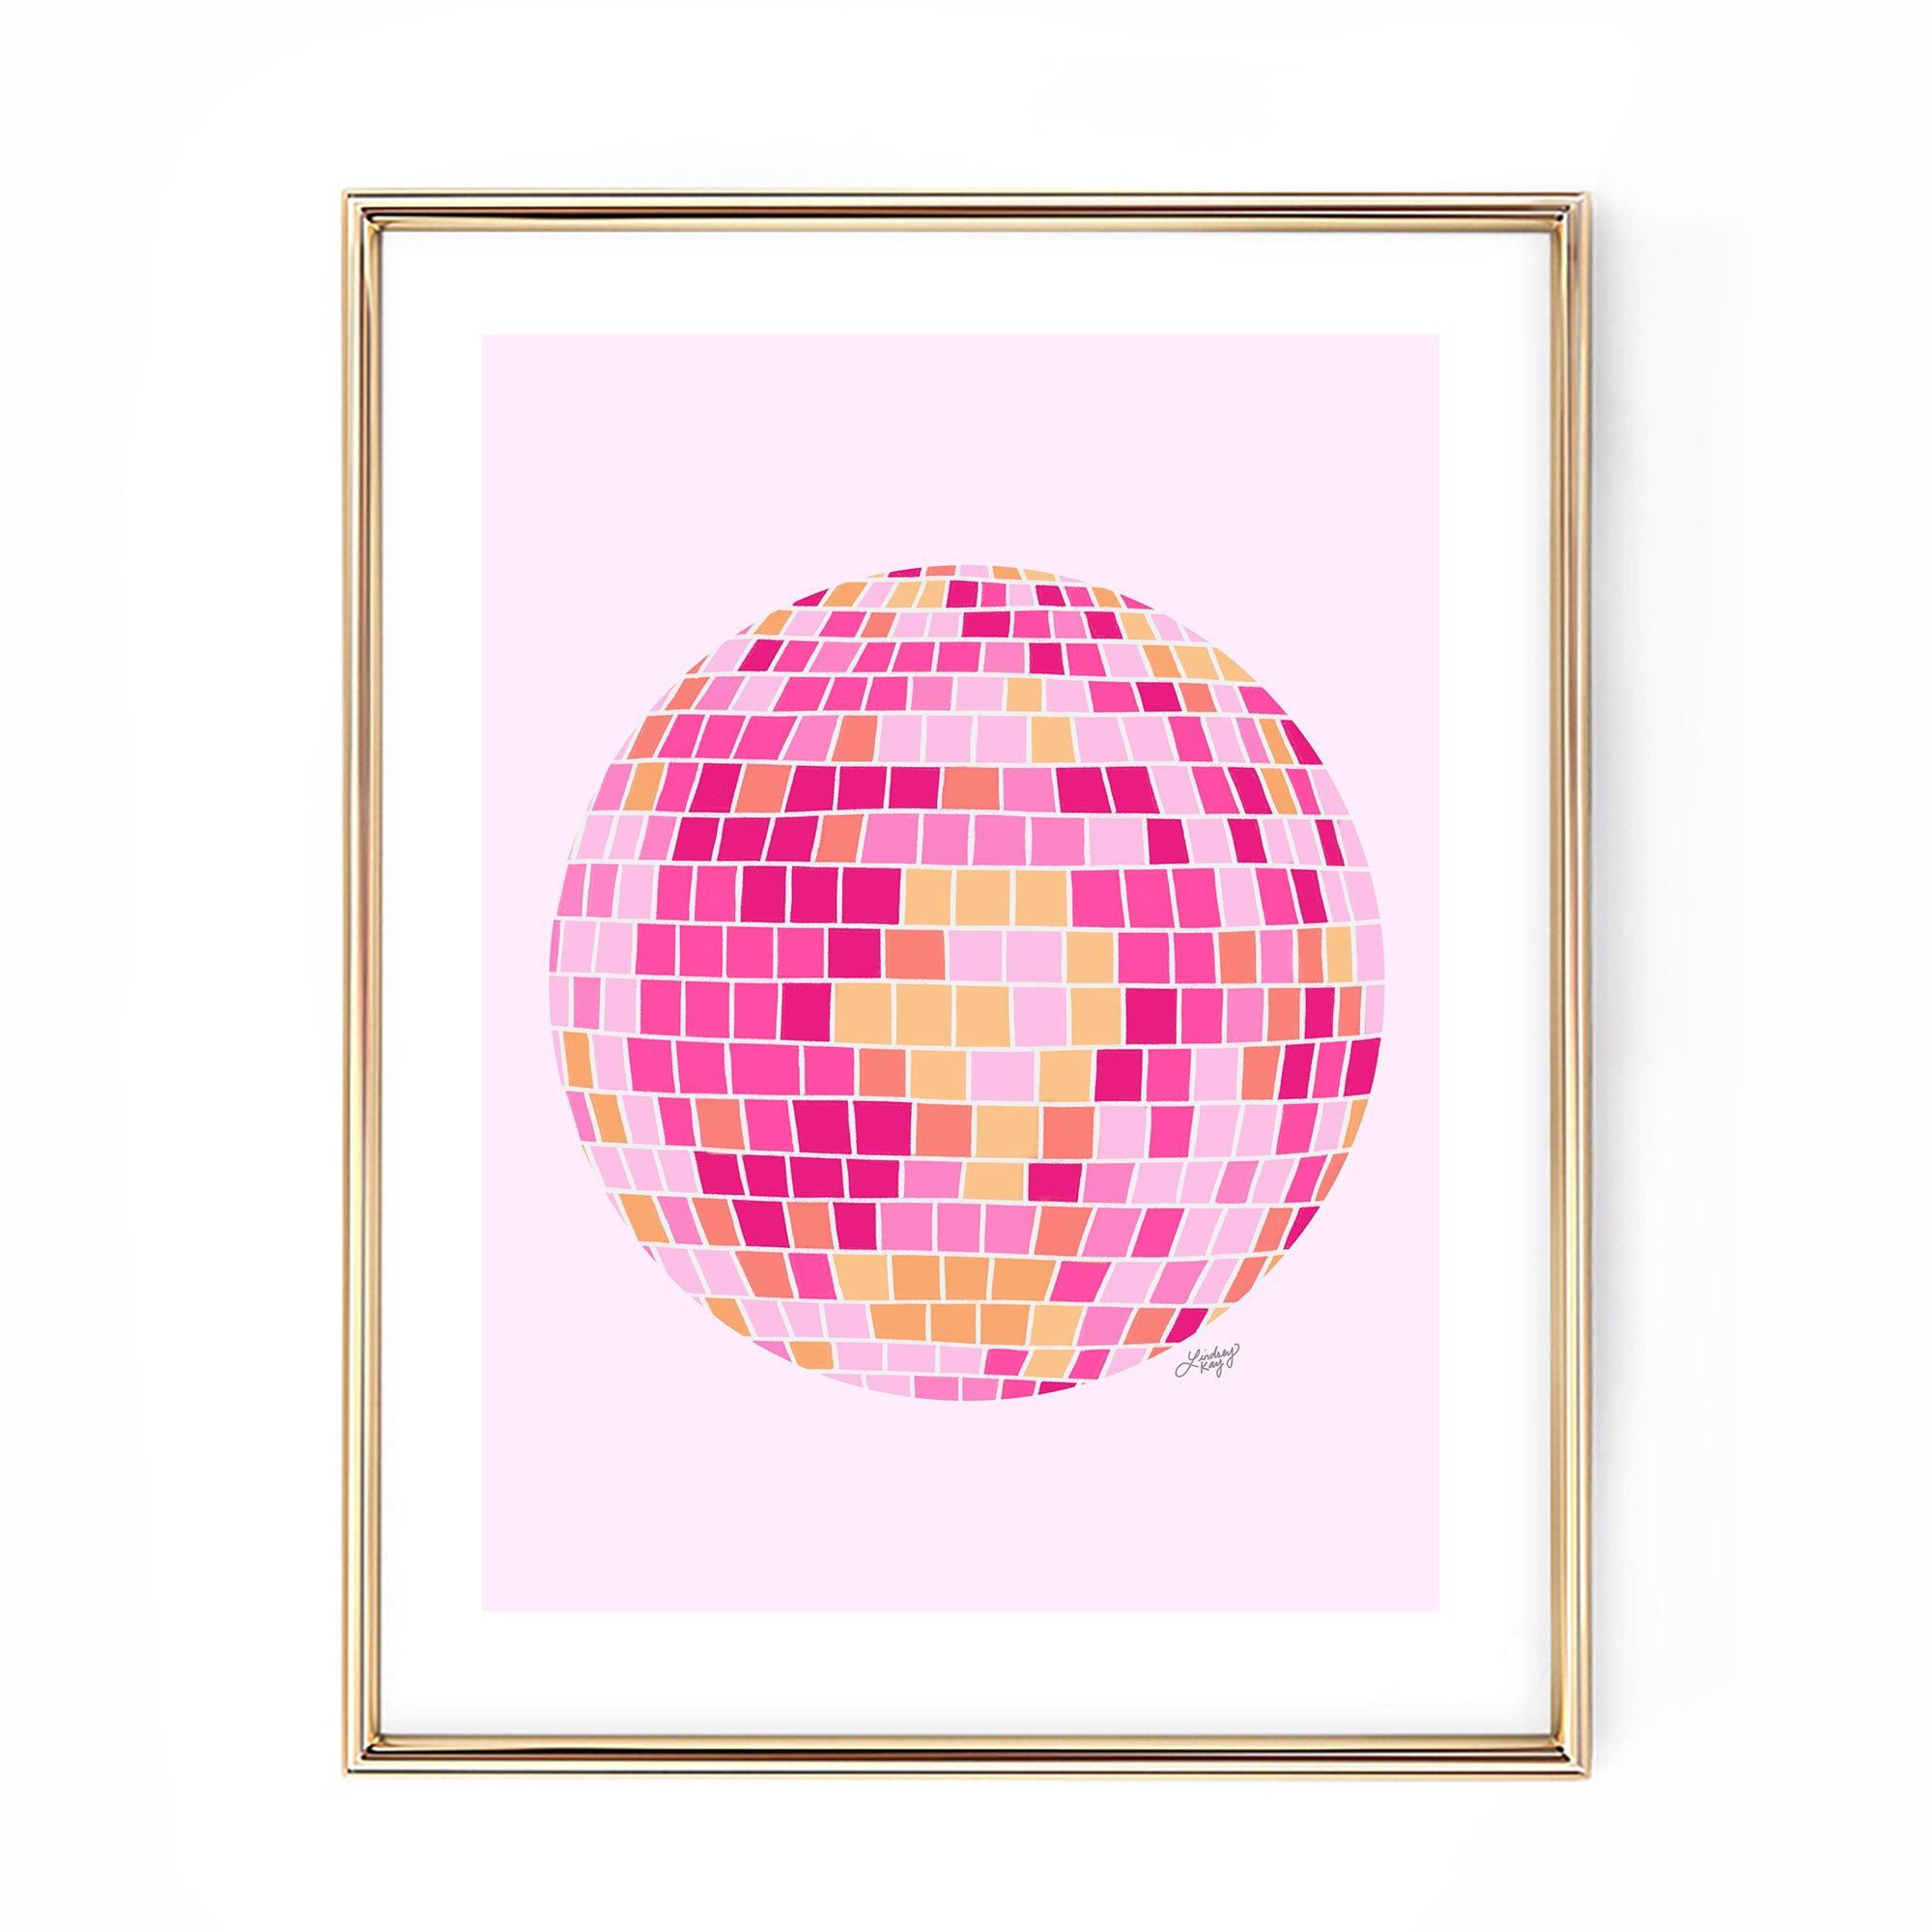 Disco Ball Illustration (Pink/Yellow Palette) - Art Print